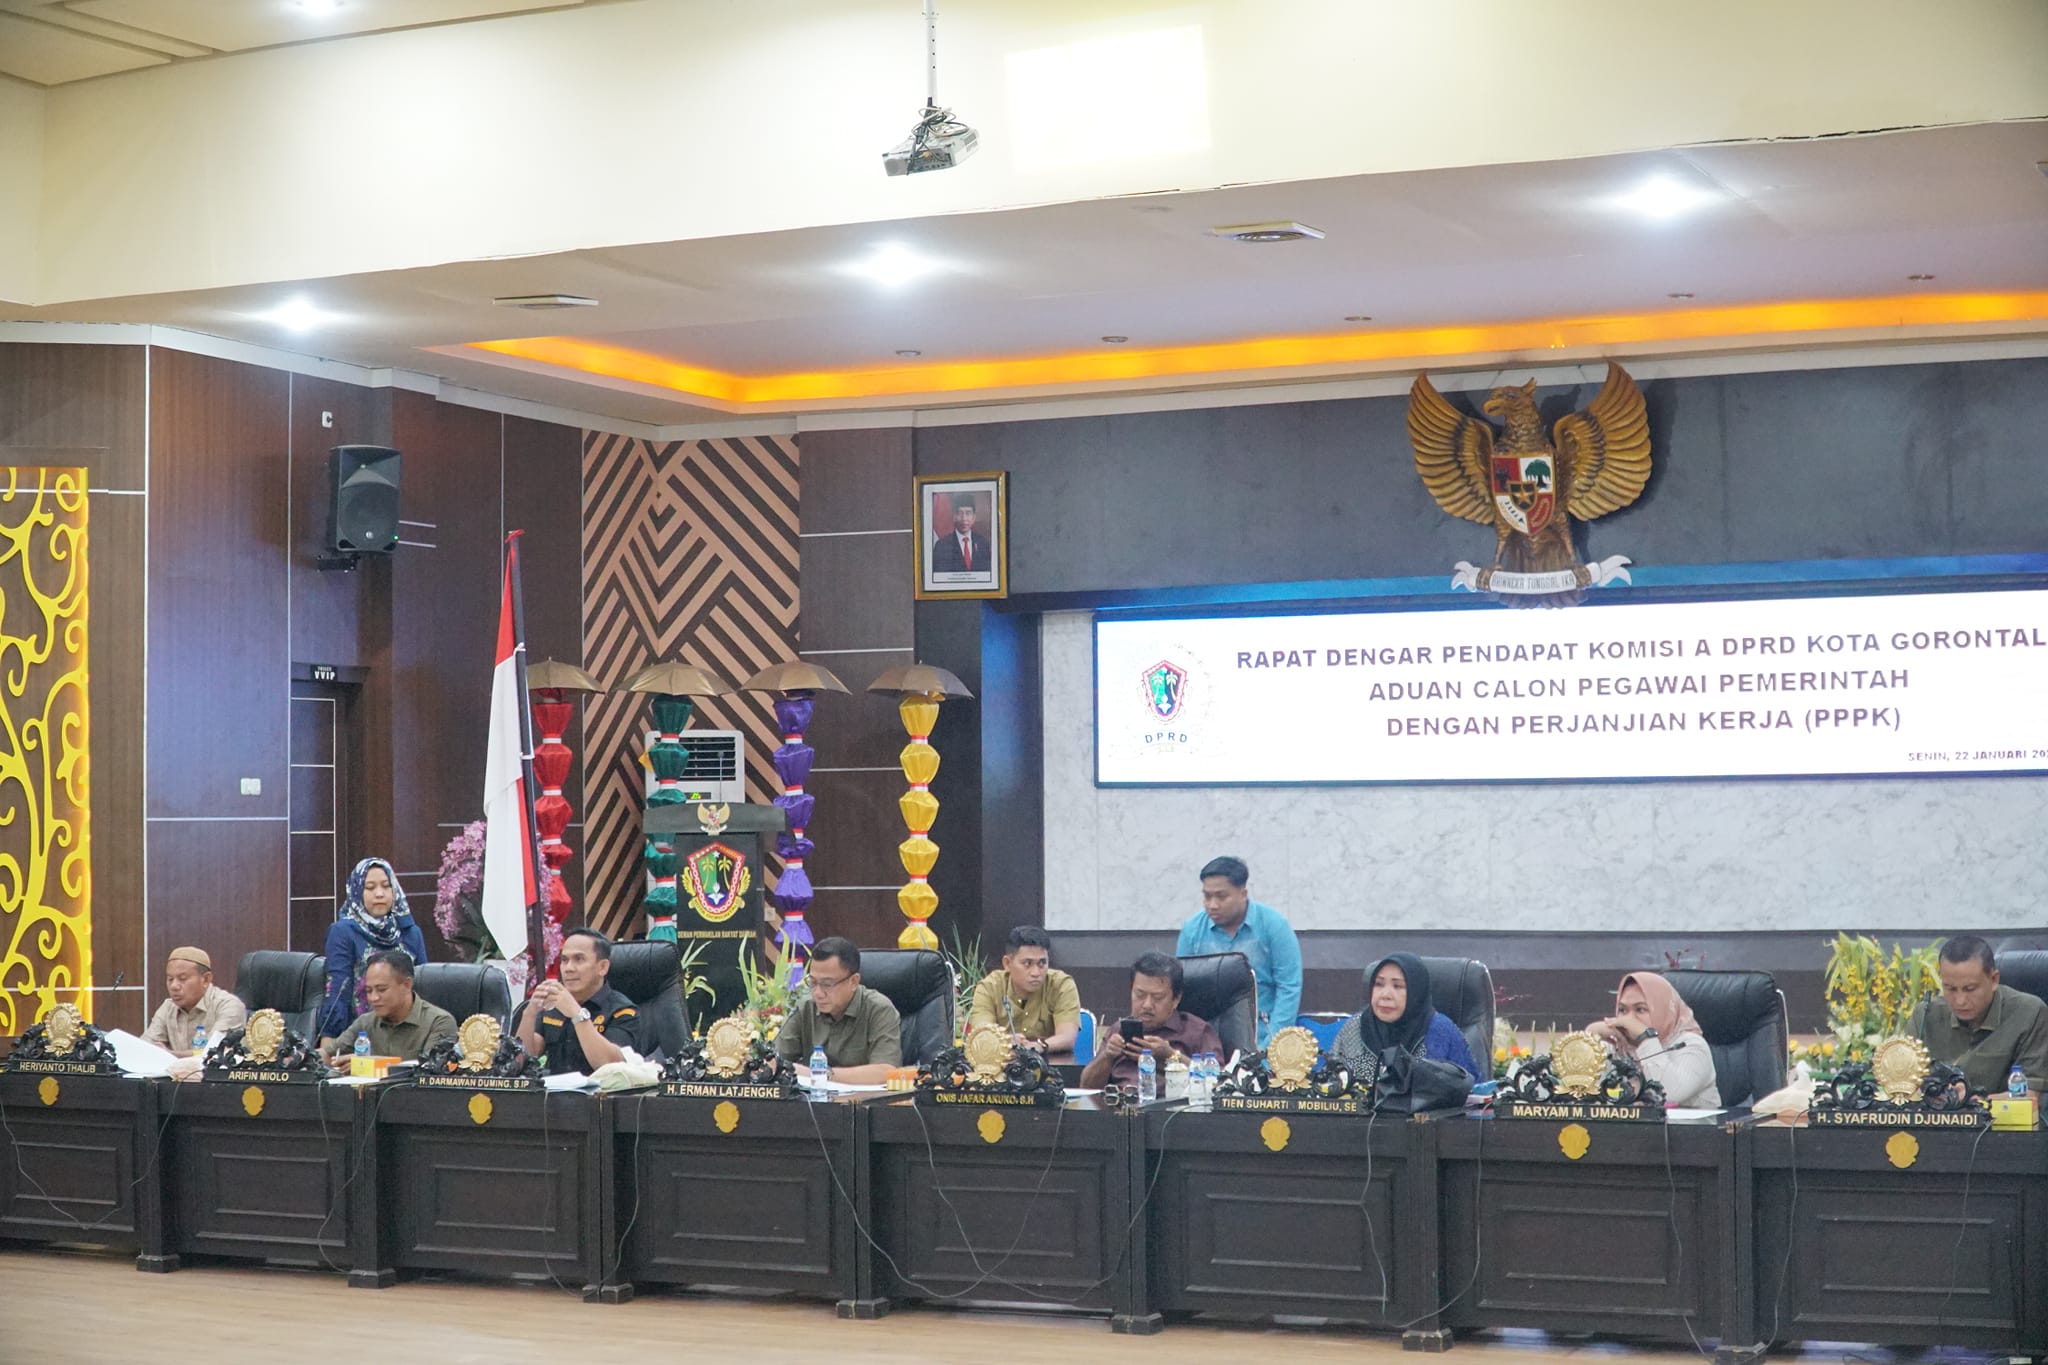 Menanggapi Aduan Pembatalan Kelulusan 7 Orang PPPK, DPRD Kota Gorontalo Gelar RDP